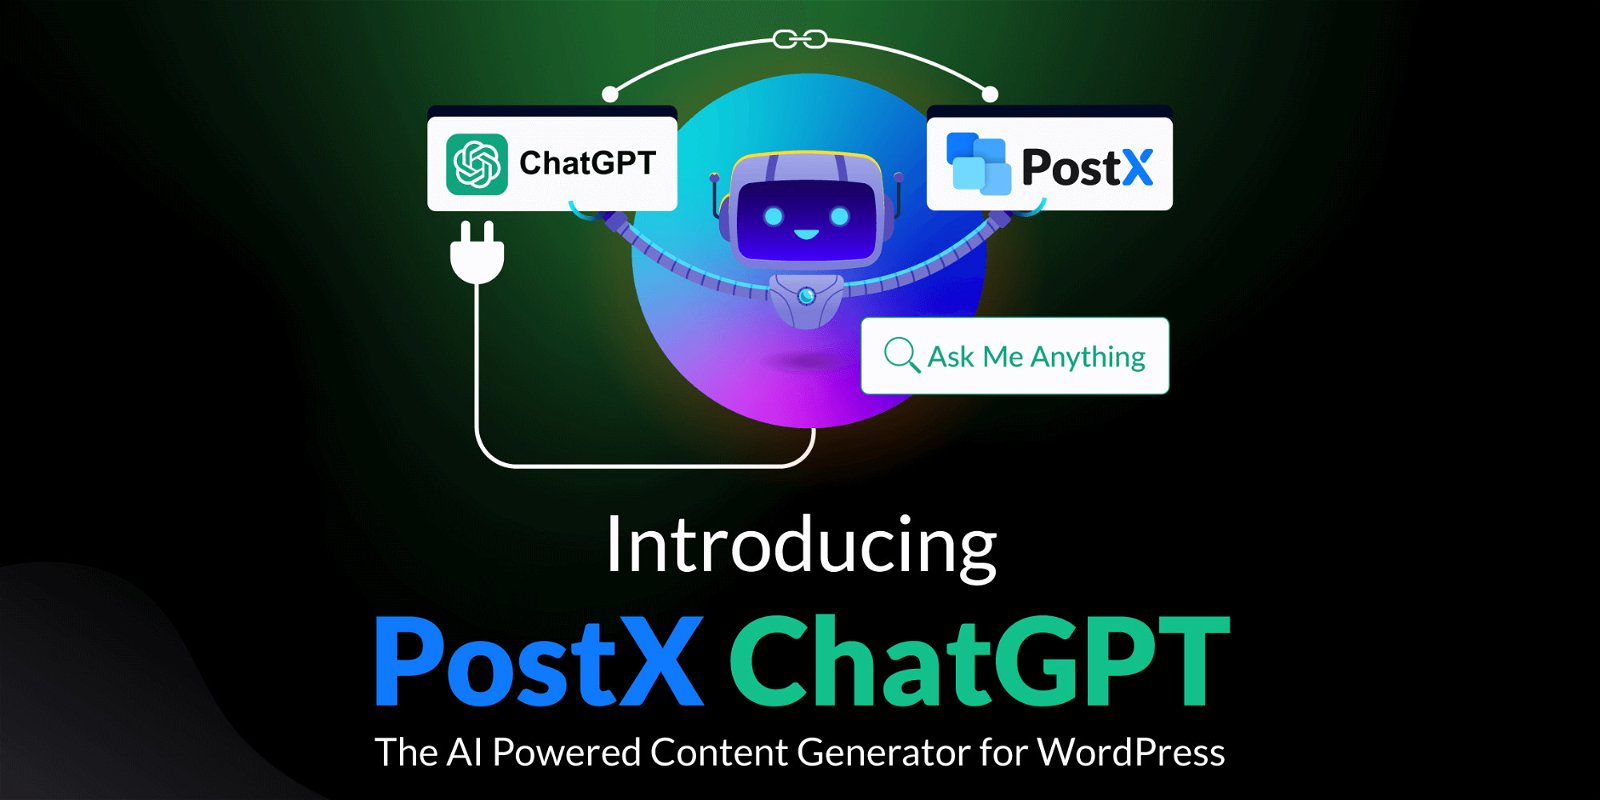 PostX ChatGPT